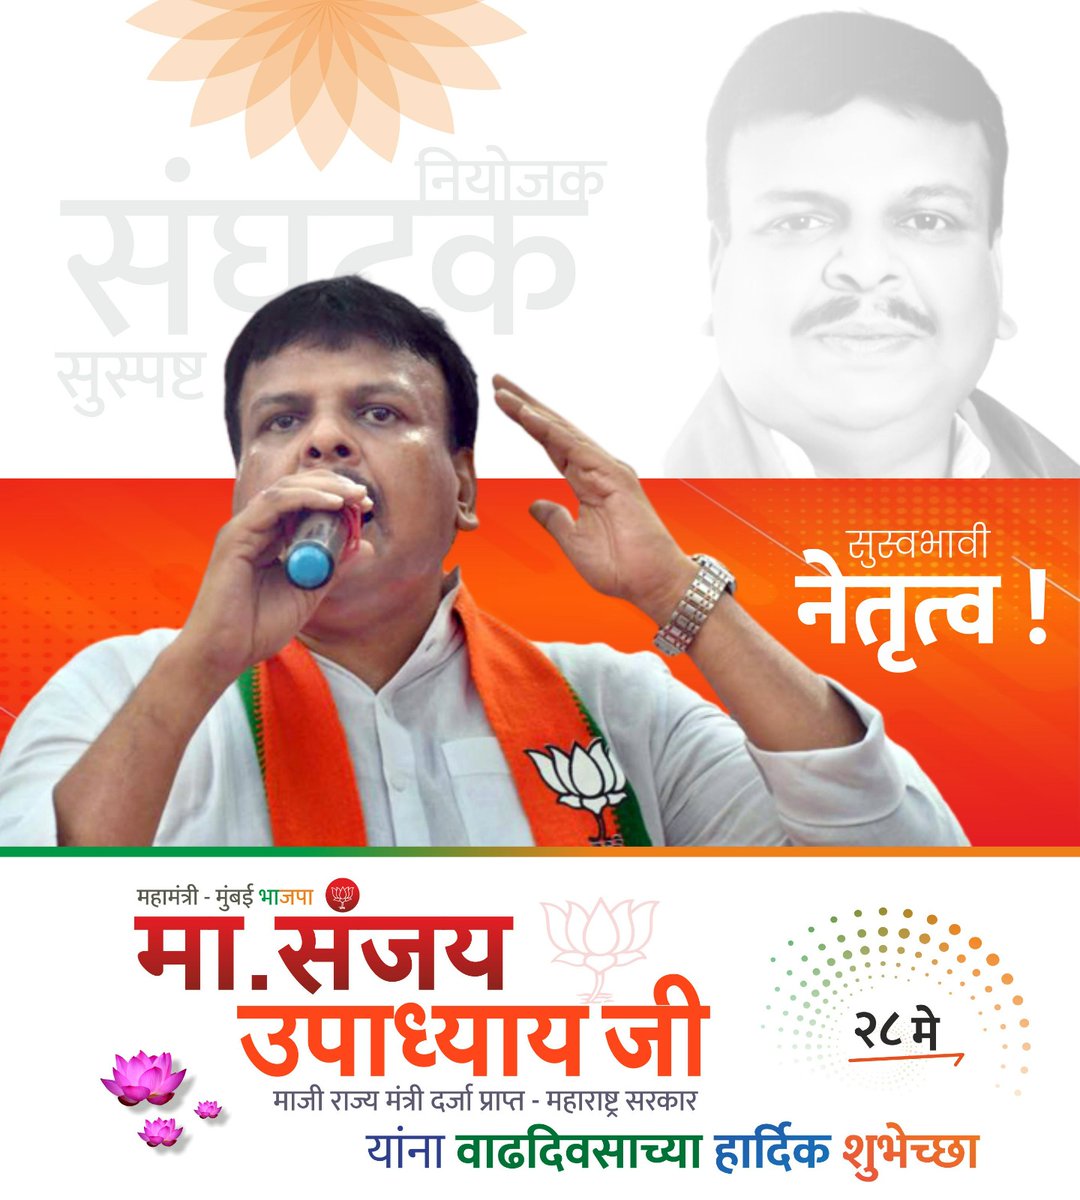 हम सभी  के लोकप्रिय  नेता @SanjayRupadhyay को जन्मदिन की हार्दिक शुभकामनाएँ!
#MumbaiBJP
#DevendraFadanvis
#AshishShelar 
#HBDSanjayUpadhyay